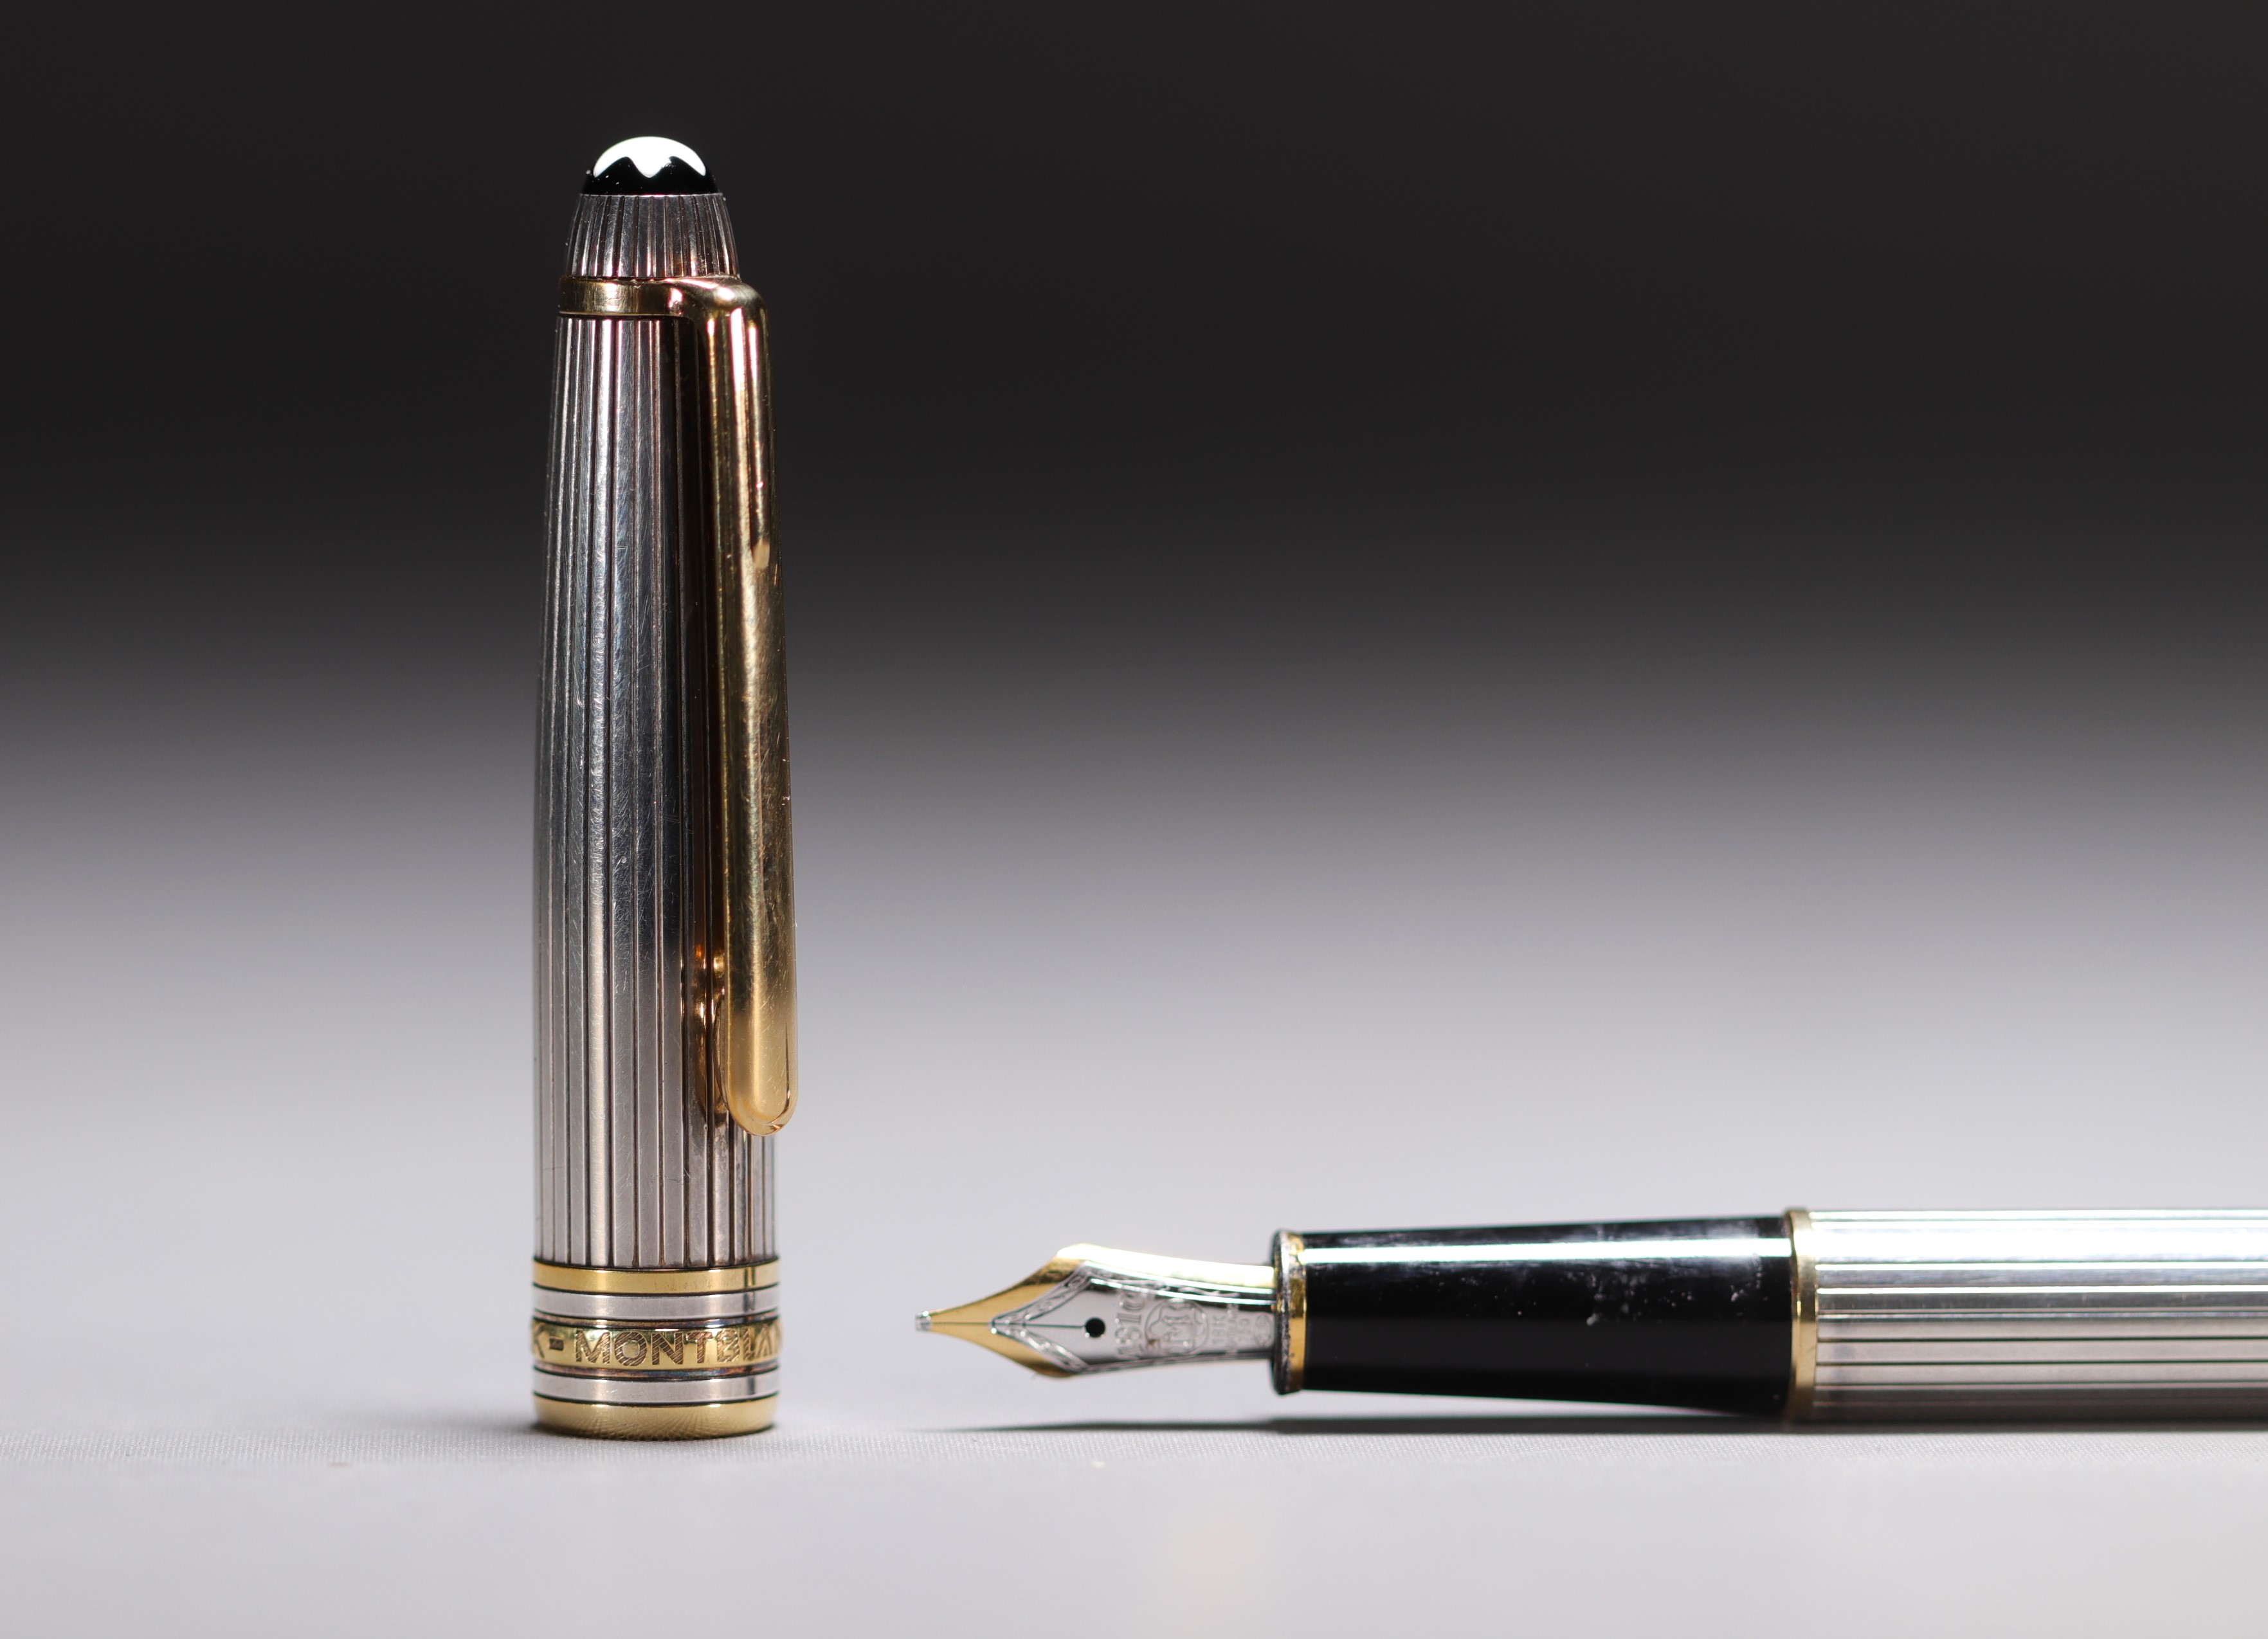 MONTBLANC - MEISTERSTUCK MOZART pen and nib holder set in sterling silver 925, 18K gold nib. - Image 3 of 5